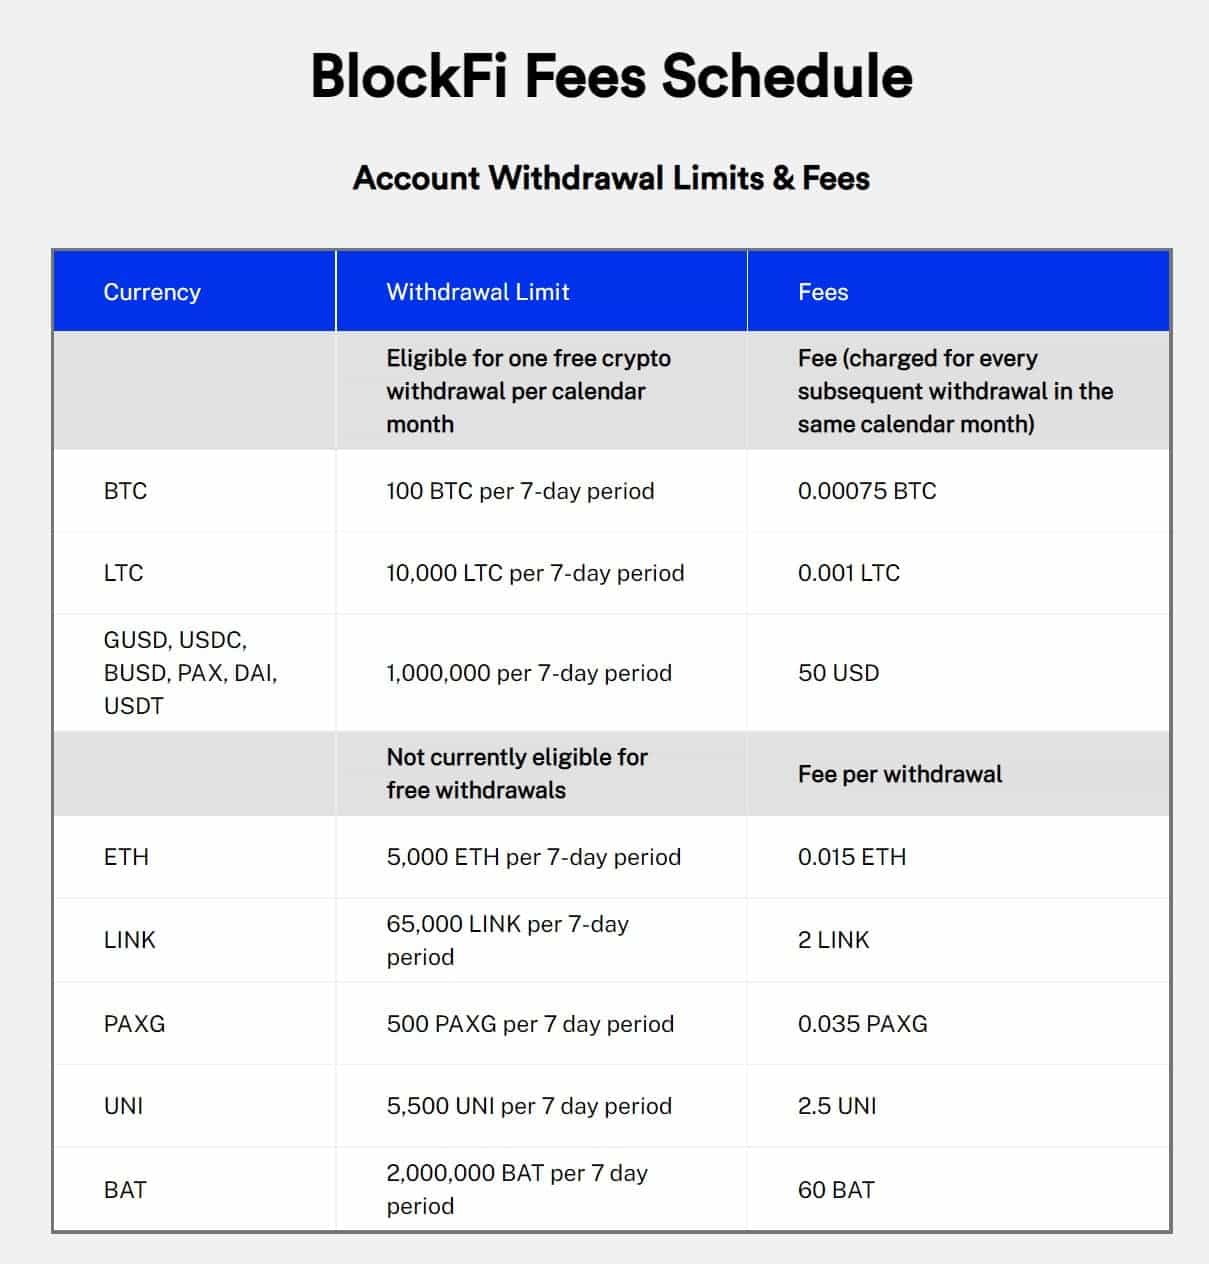 BlockFi fees